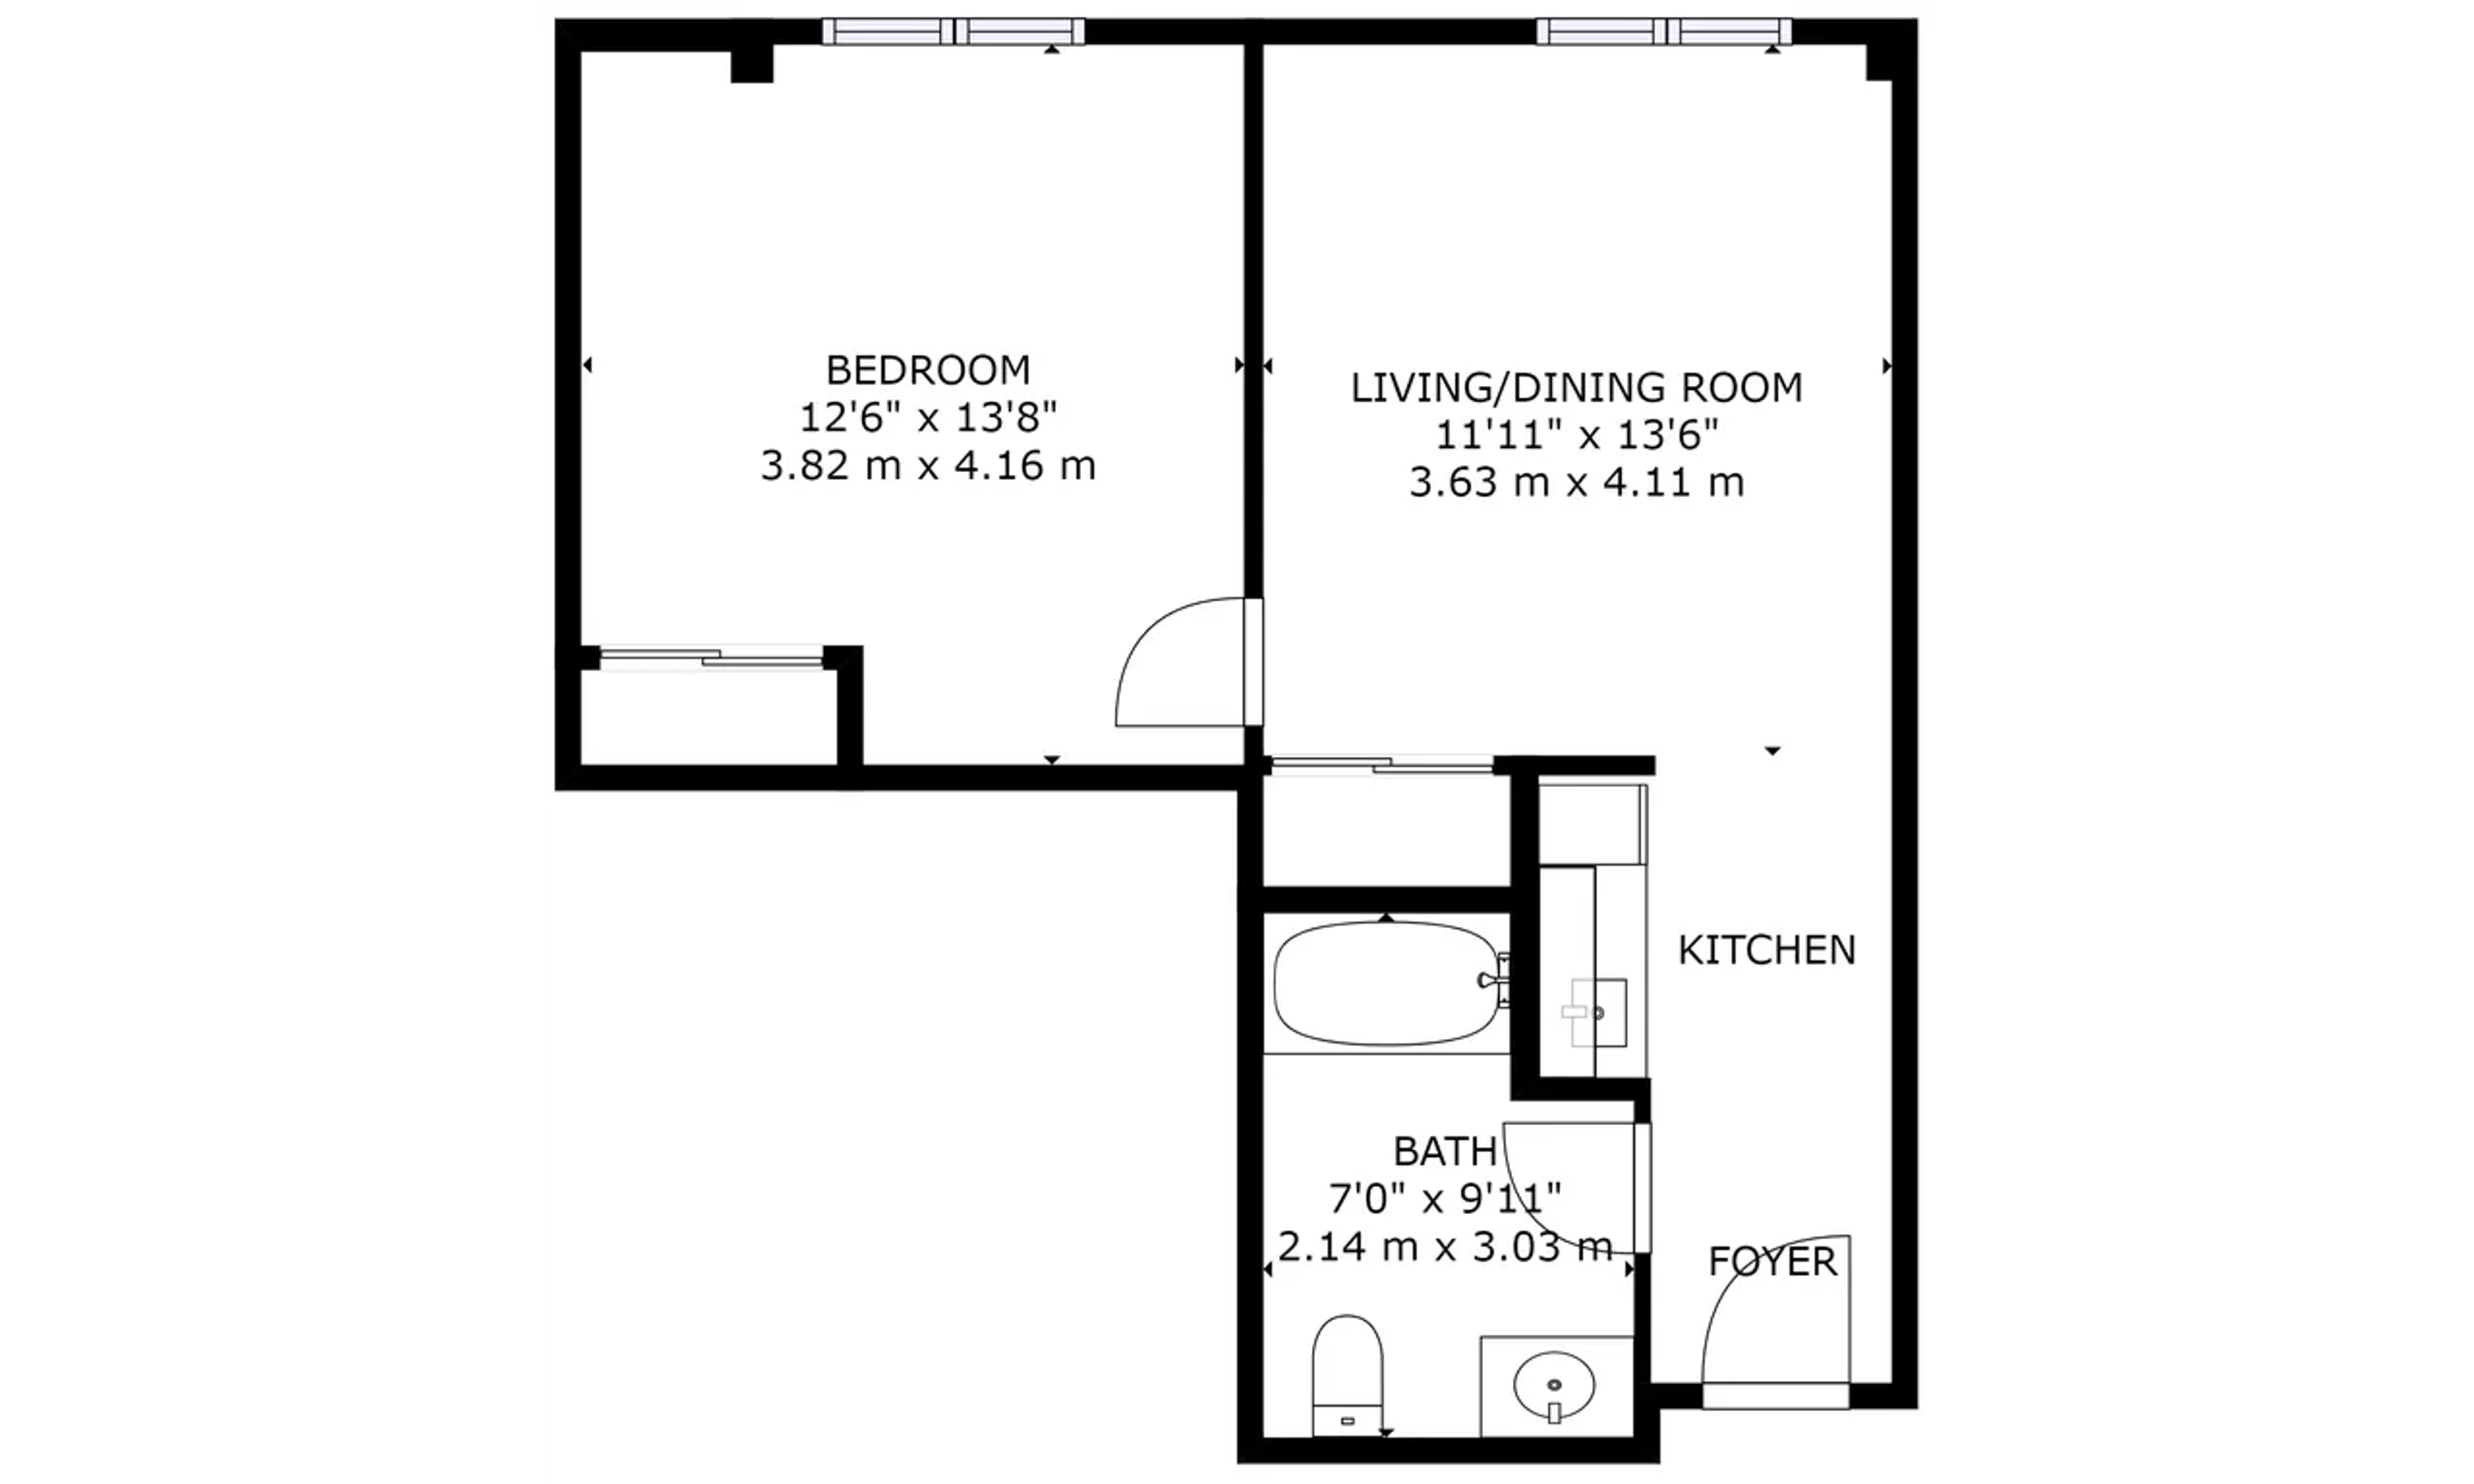 Renaissance Sample 1 Bedroom Plan A